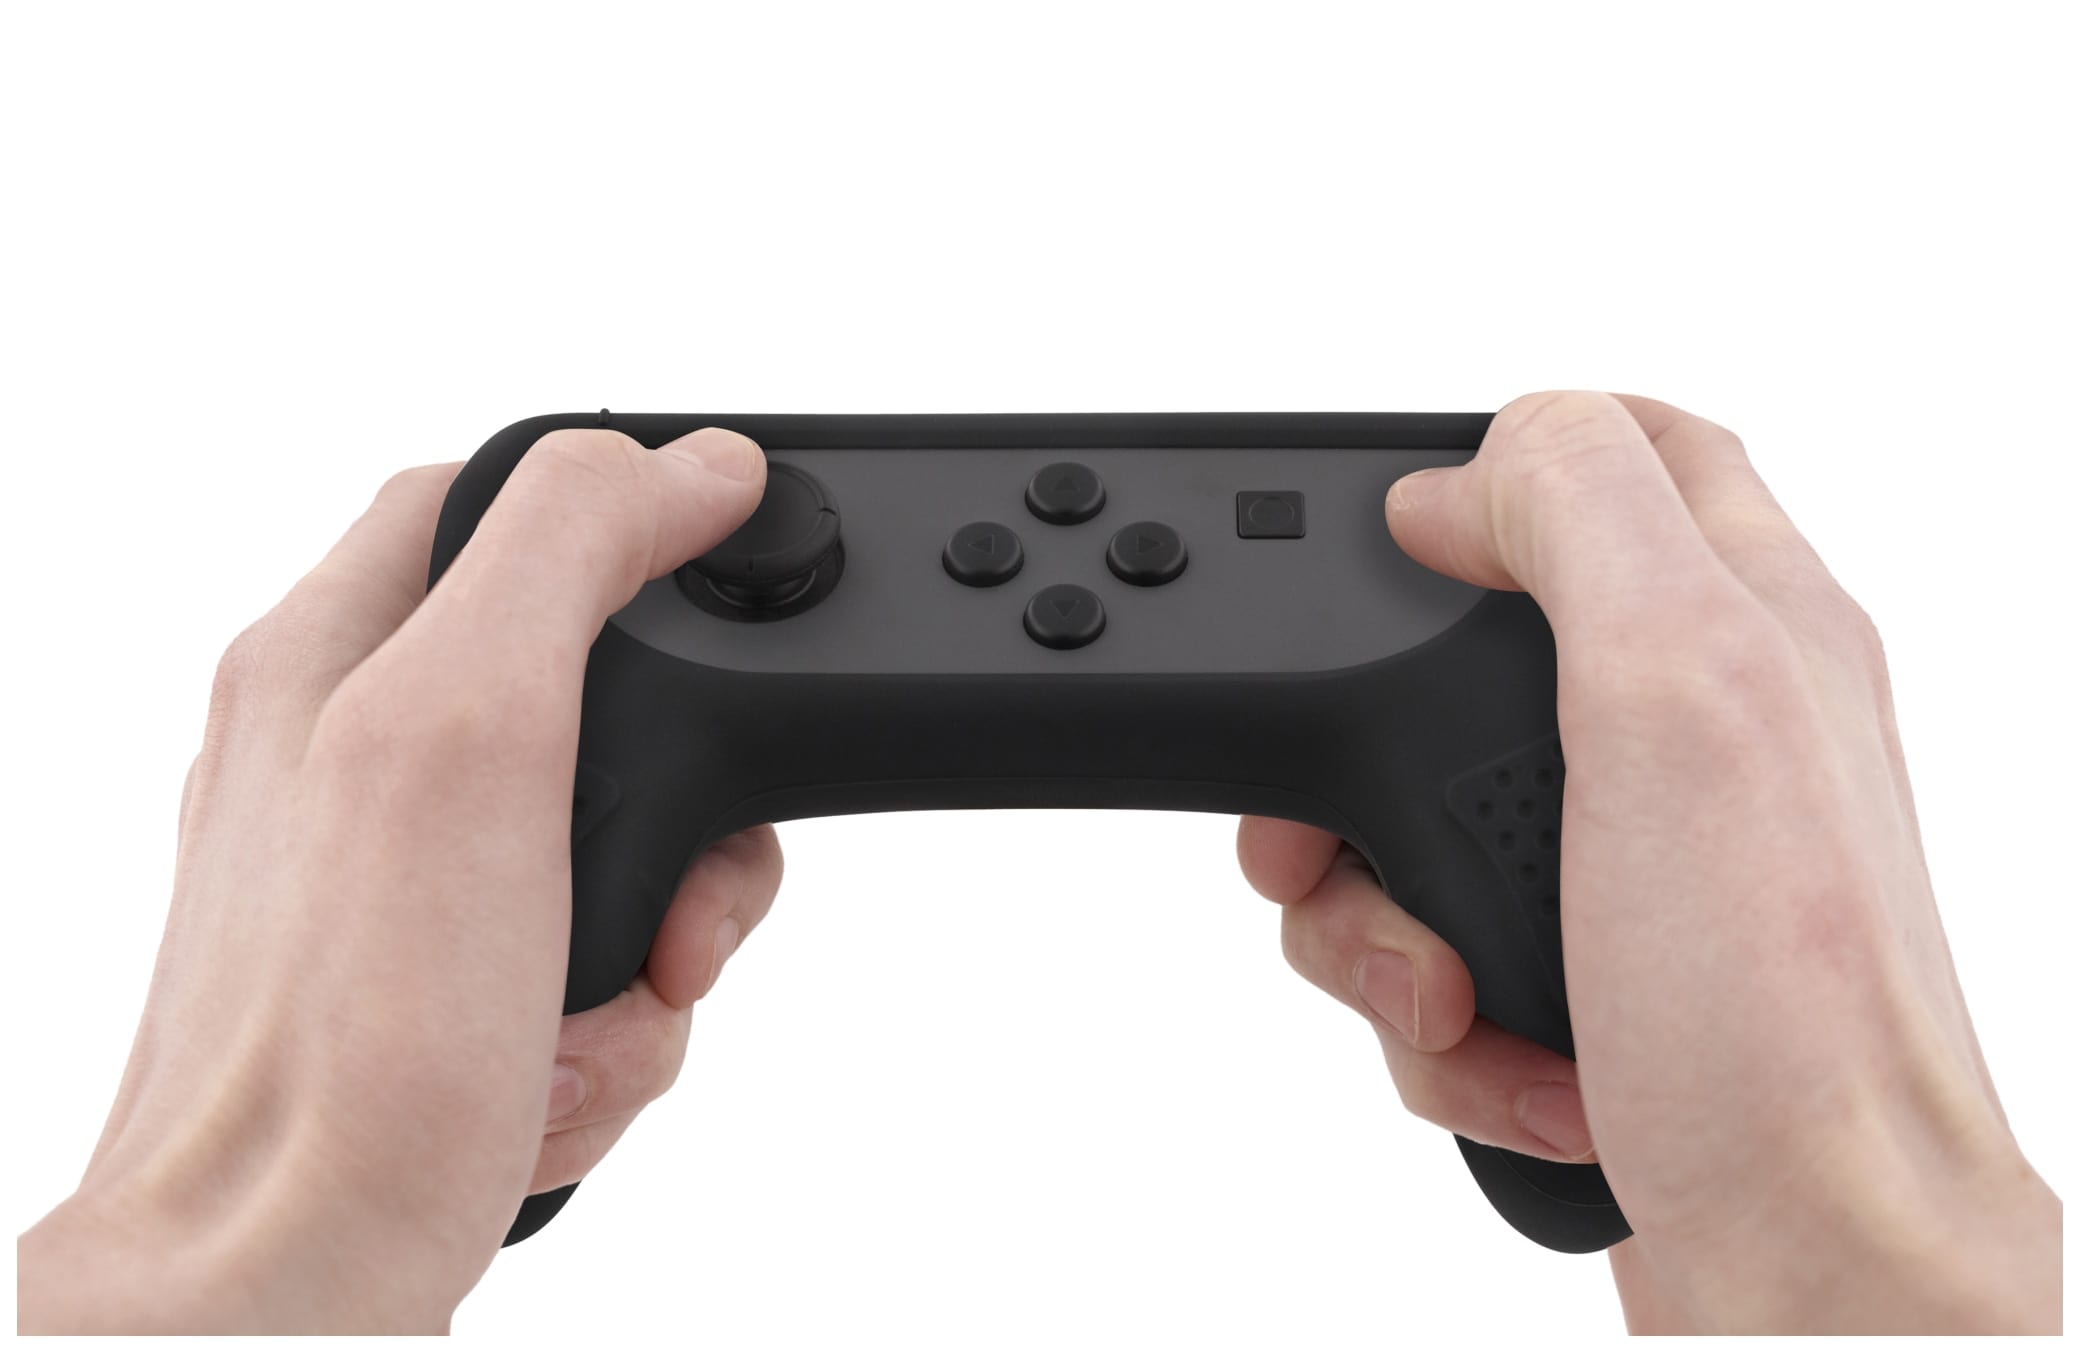 DELTACO GAMING Joy-Con Silikongriffe für Nintendo Switch, schwarz